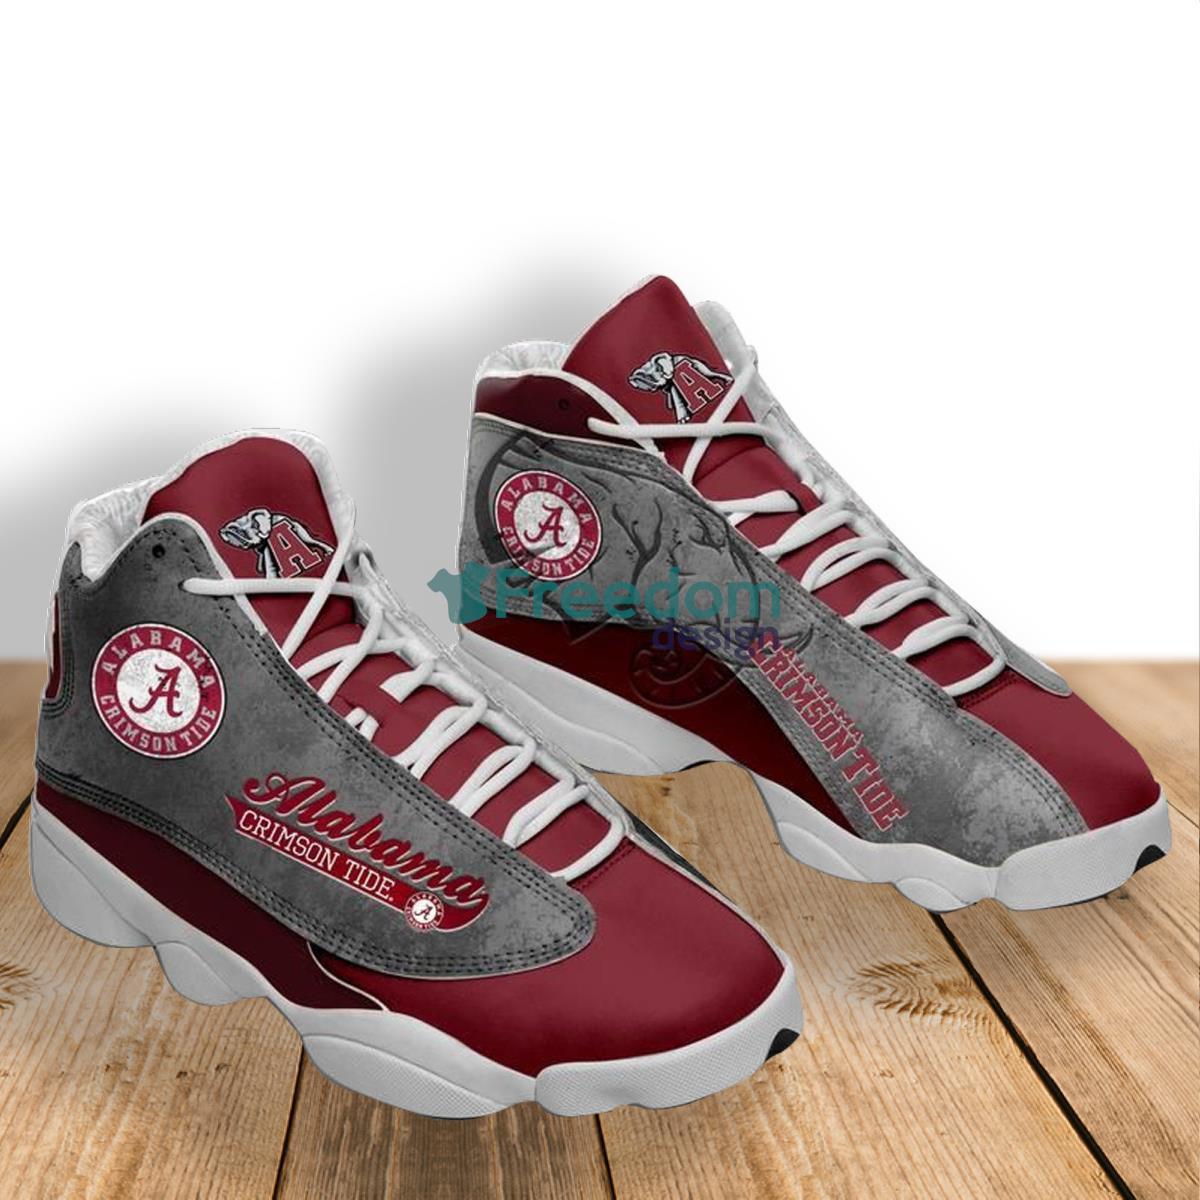 Alabama Crimson Tide Football Team Air Jordan 13 Shoes For Fans Product Photo 1